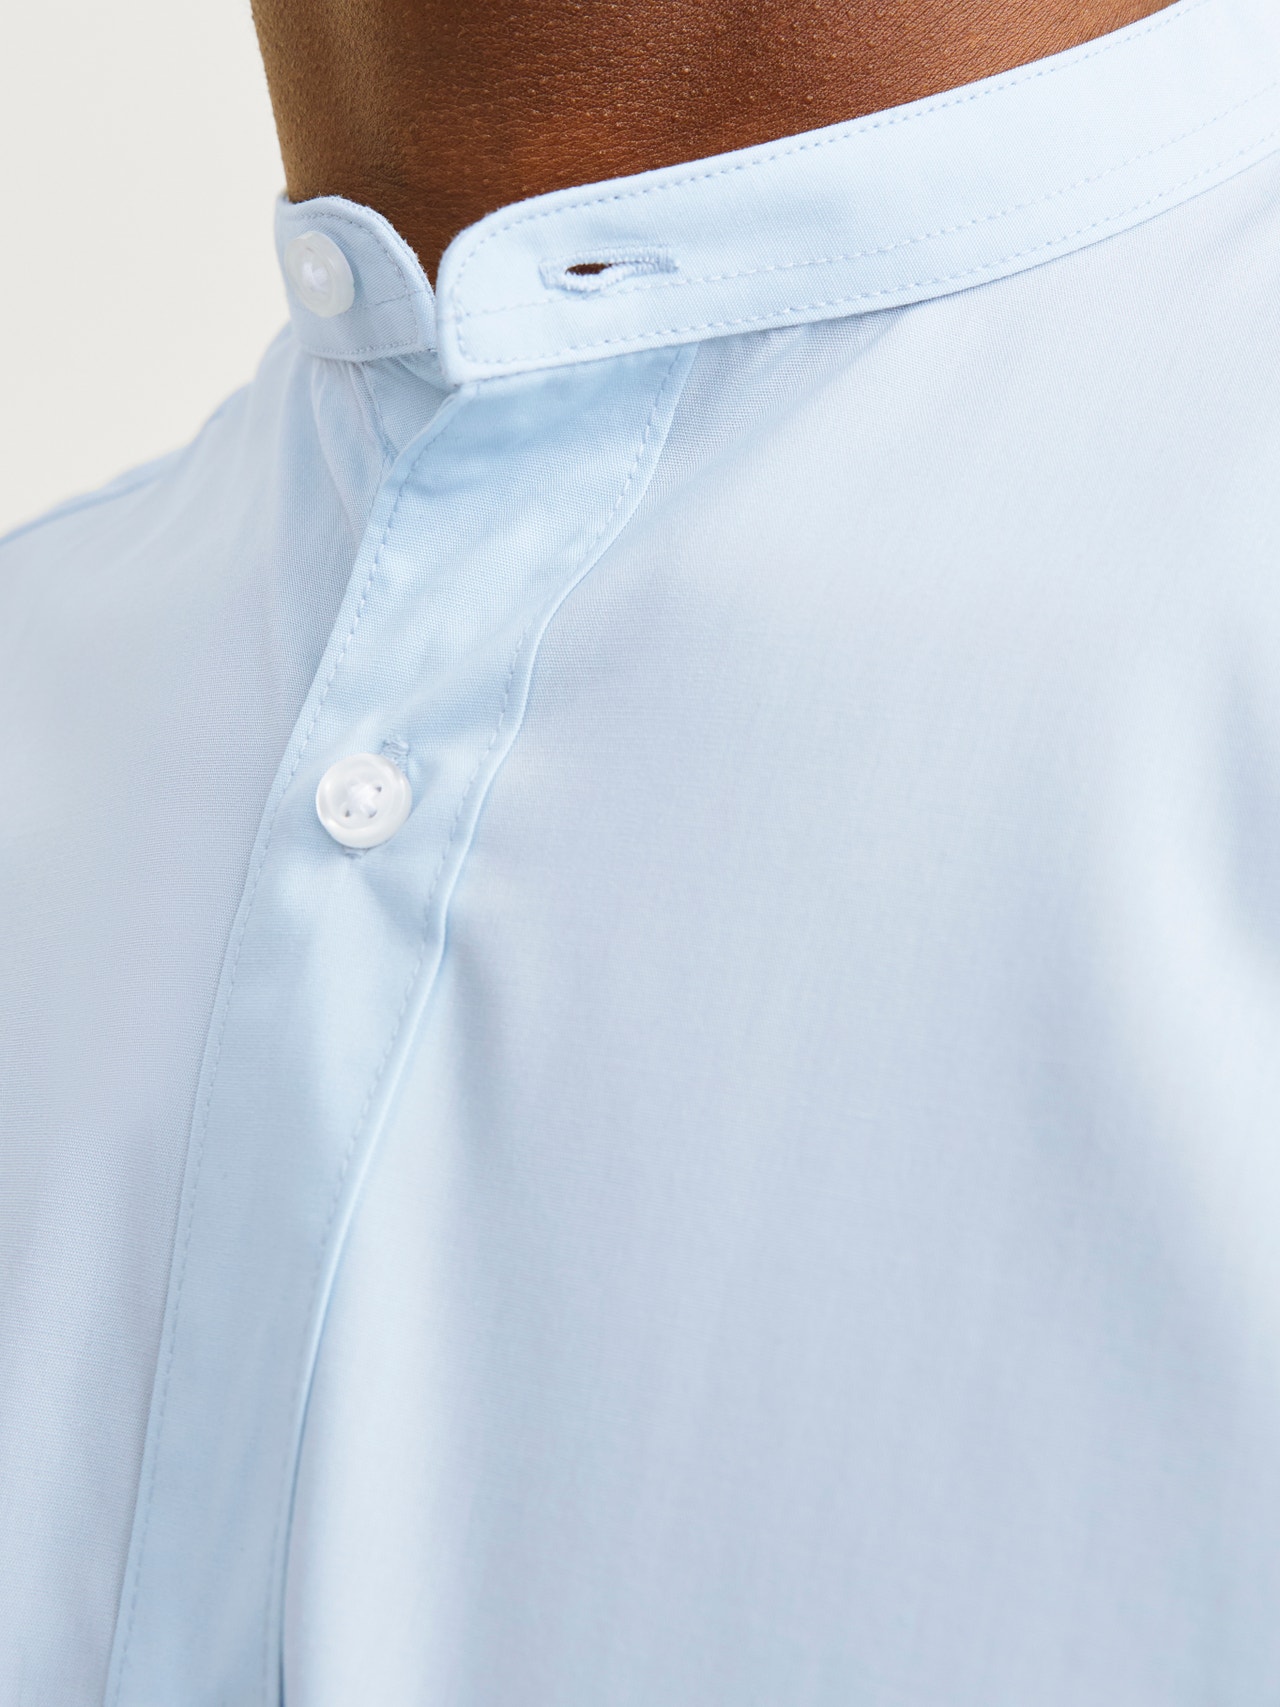 Jack & Jones Slim Fit Neformalus marškiniai -Cashmere Blue - 12205921